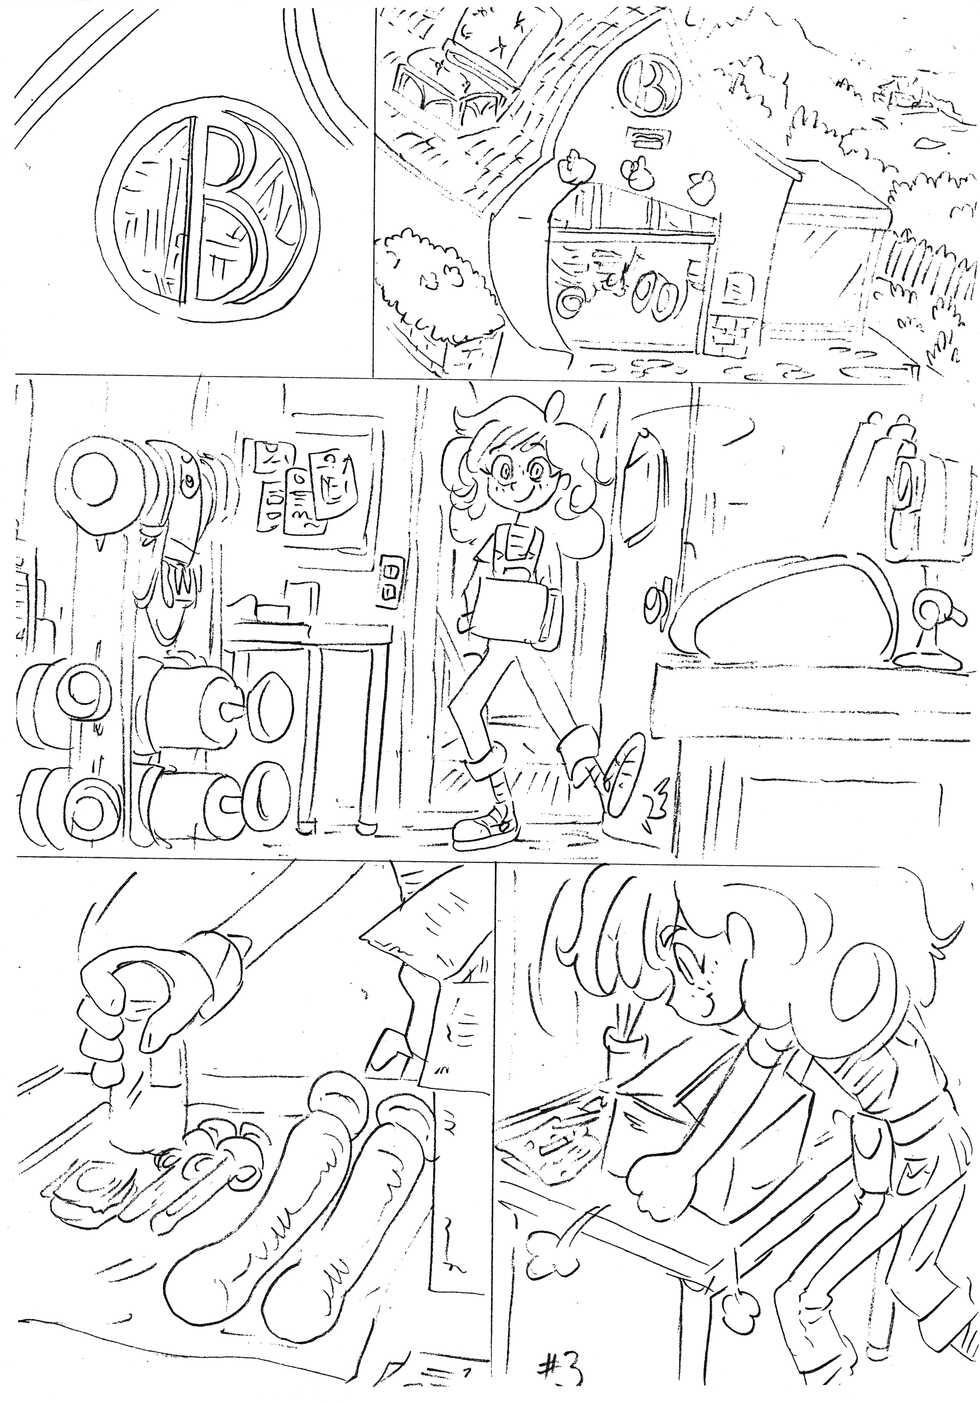 [Union of the snake (Shinda Mane)] Psychomatic Counterfeit EX: GoldieBlox#3 (GoldieBlox) - Page 2